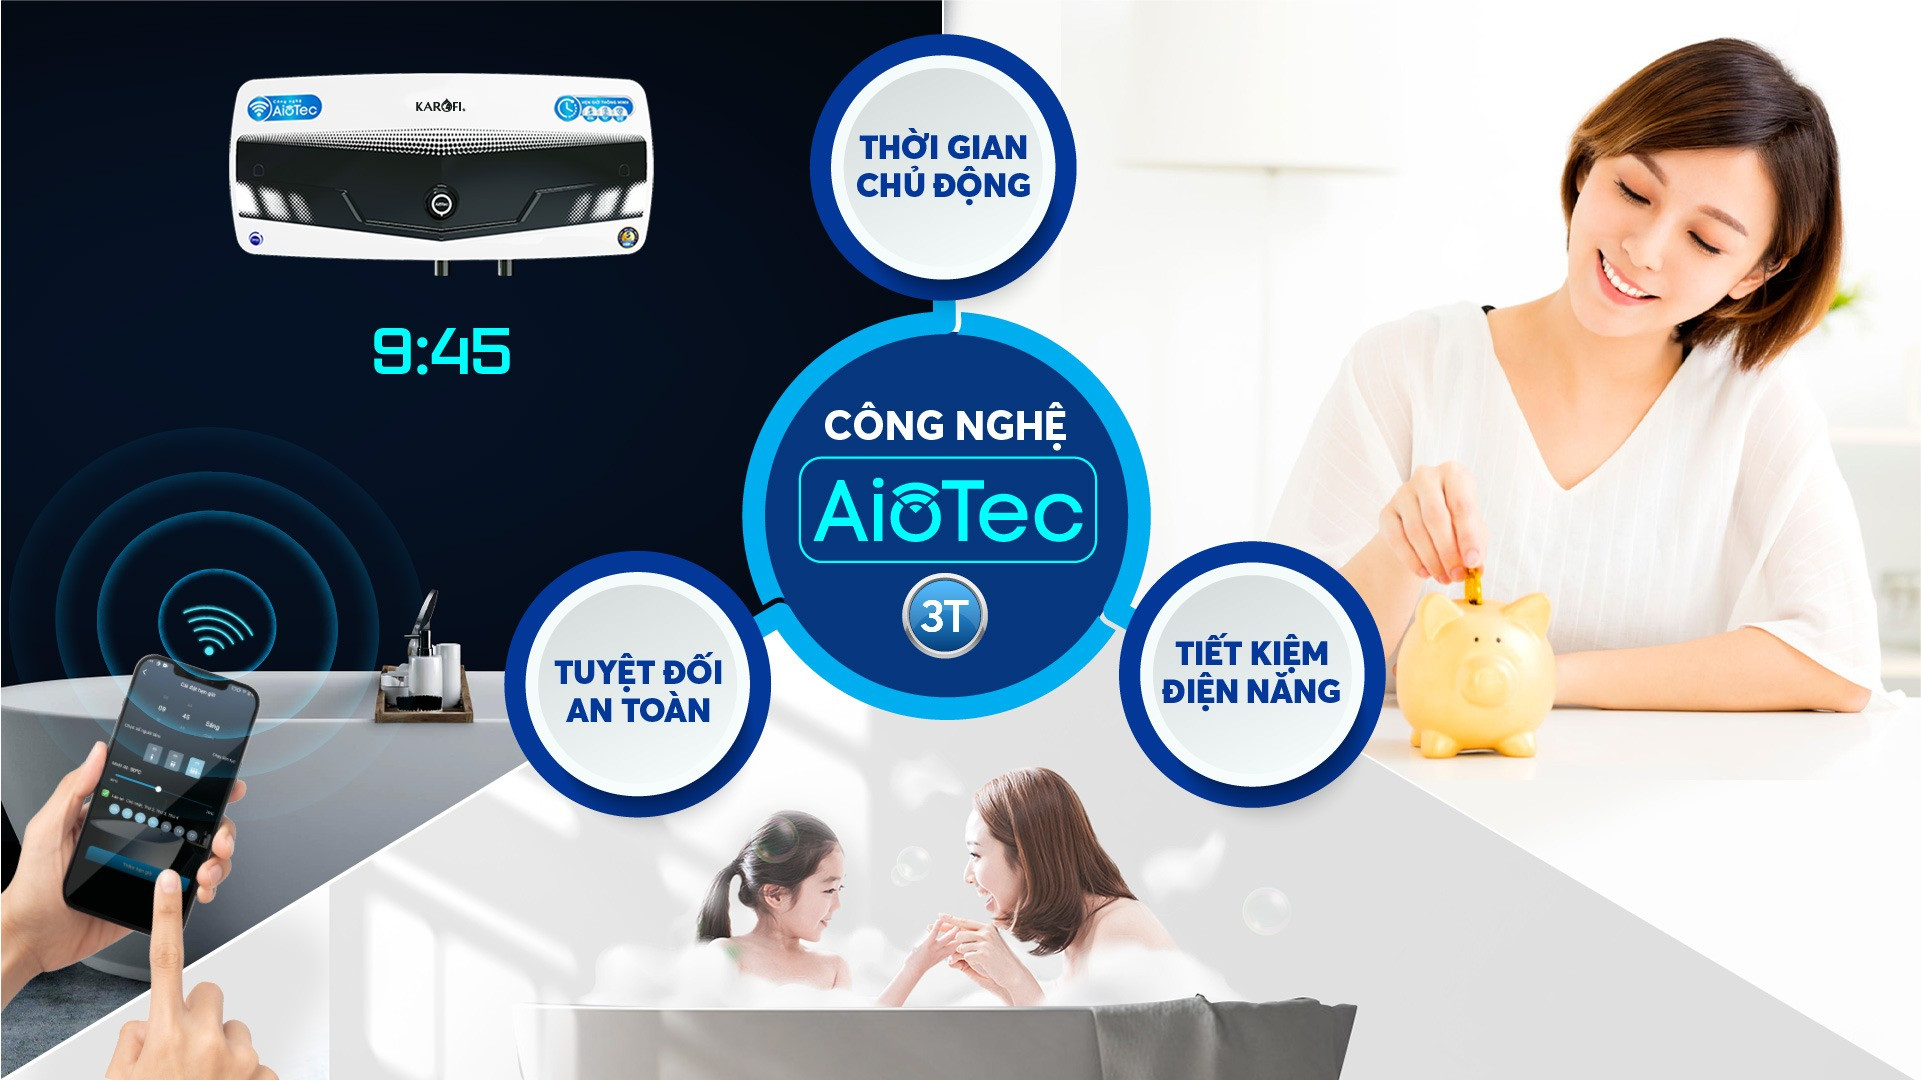 Ứng dụng AIoTec - 3T